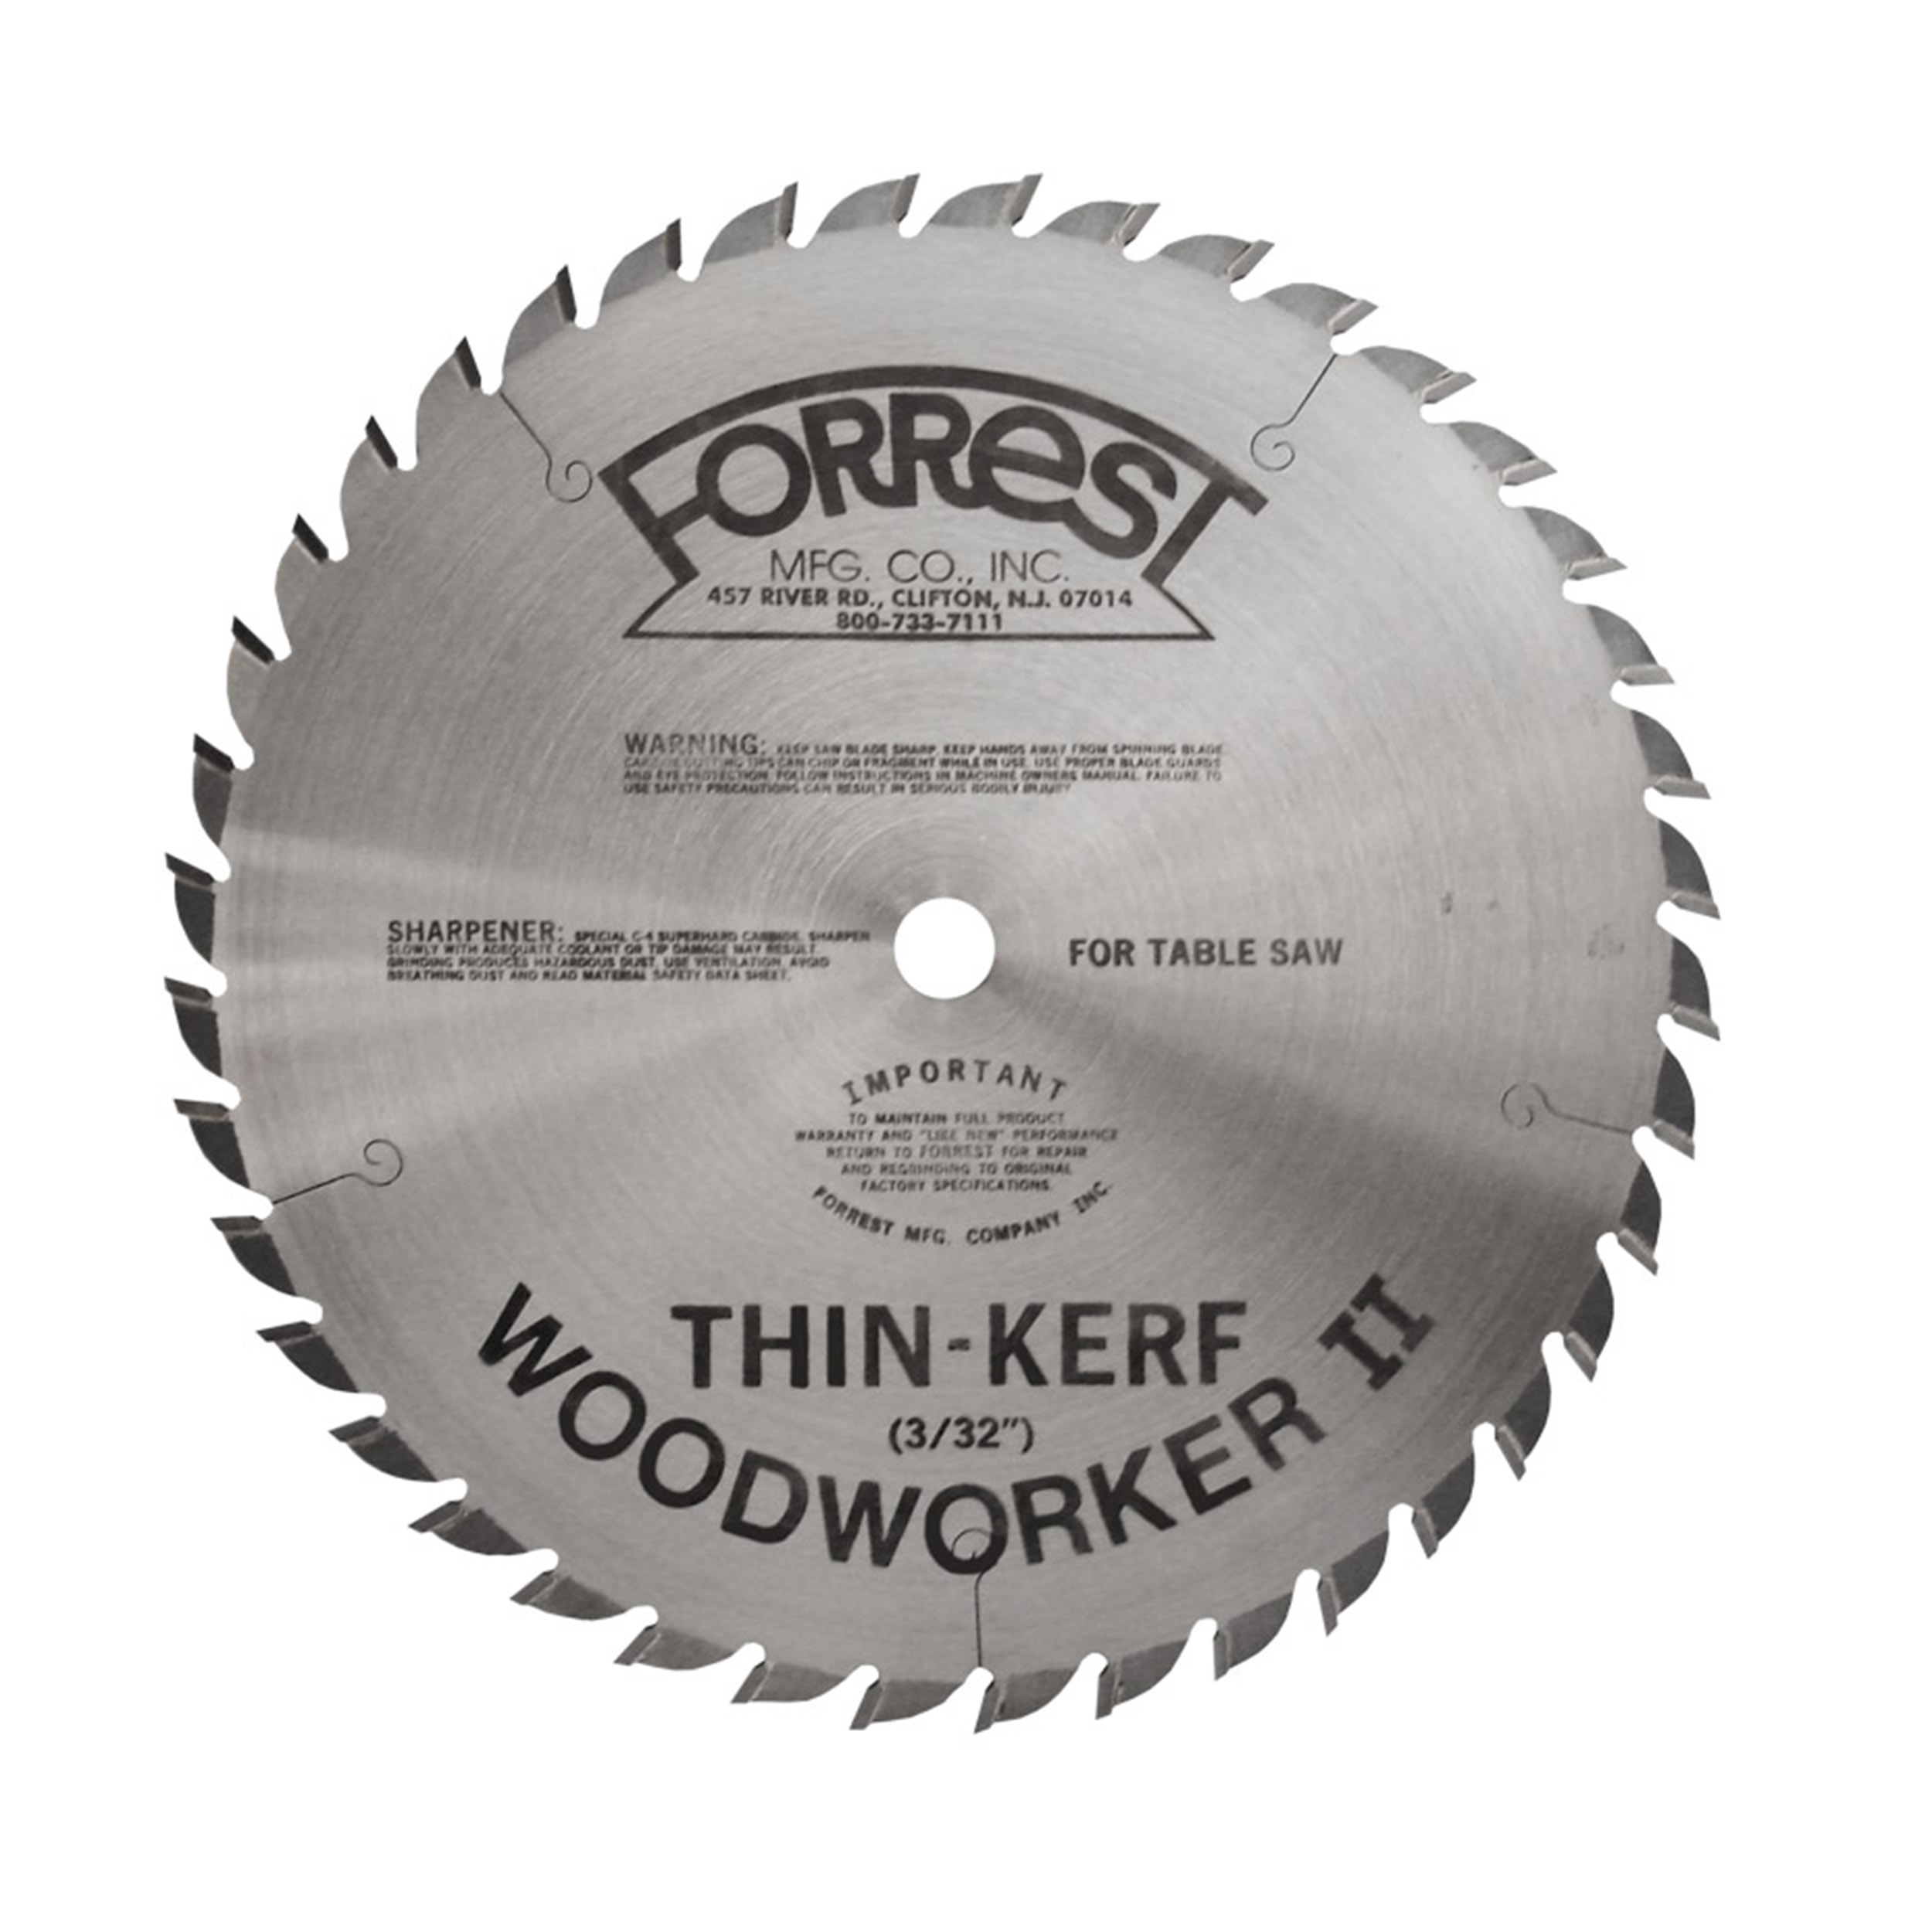 Ww09407100 Woodworker Ii Saw Blade, 9" X 40t, .100" Kerf X 5/8" Bore, Atb